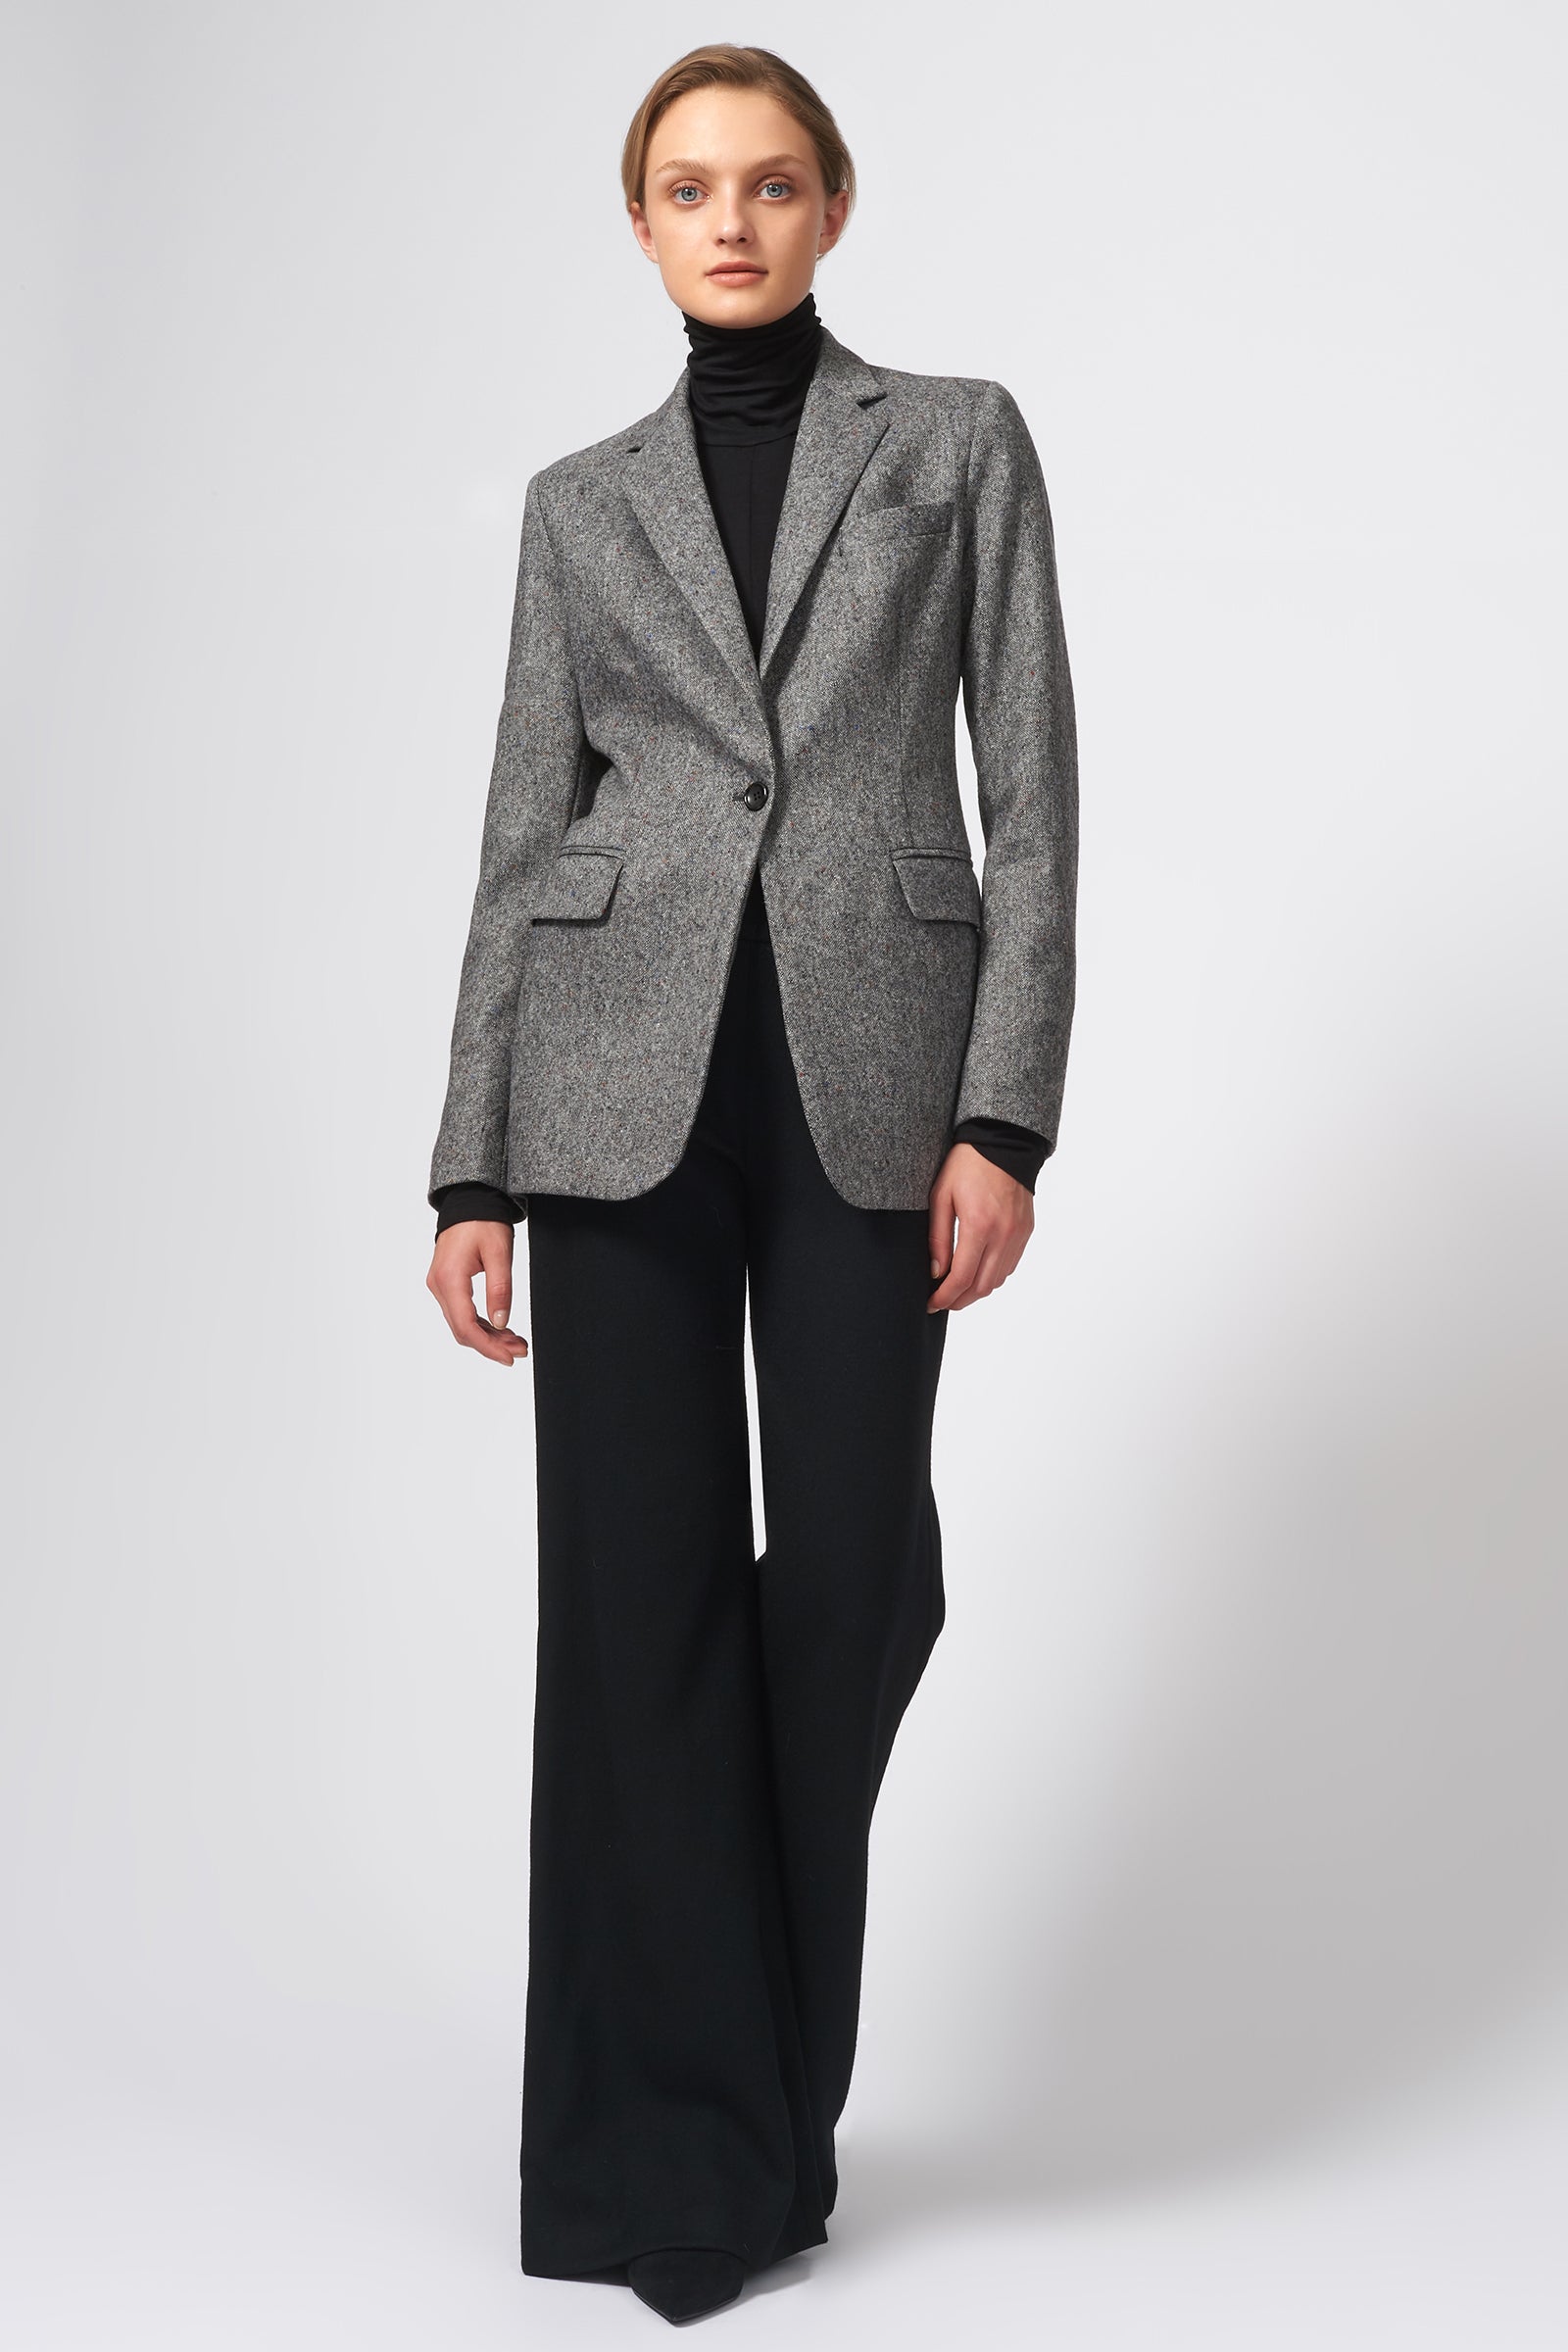 Kal Rieman Classic Notch Blazer in Grey Tweed on Model Front Full View